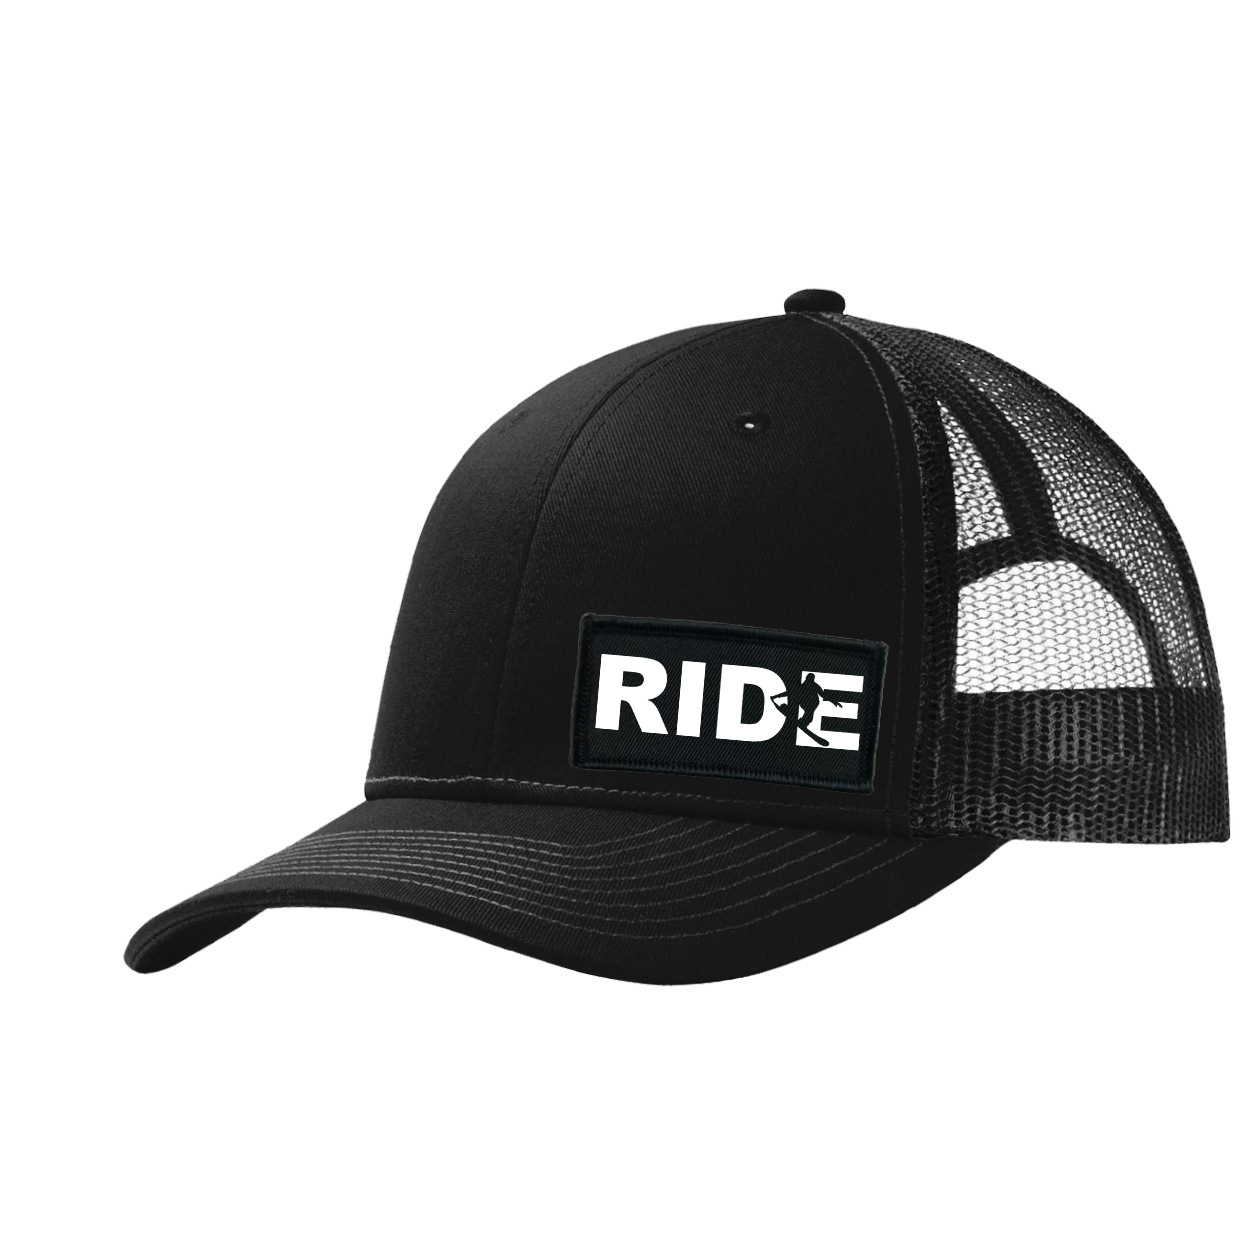 Ride Snowboard Logo Night Out Woven Patch Snapback Trucker Hat Black (White Logo)